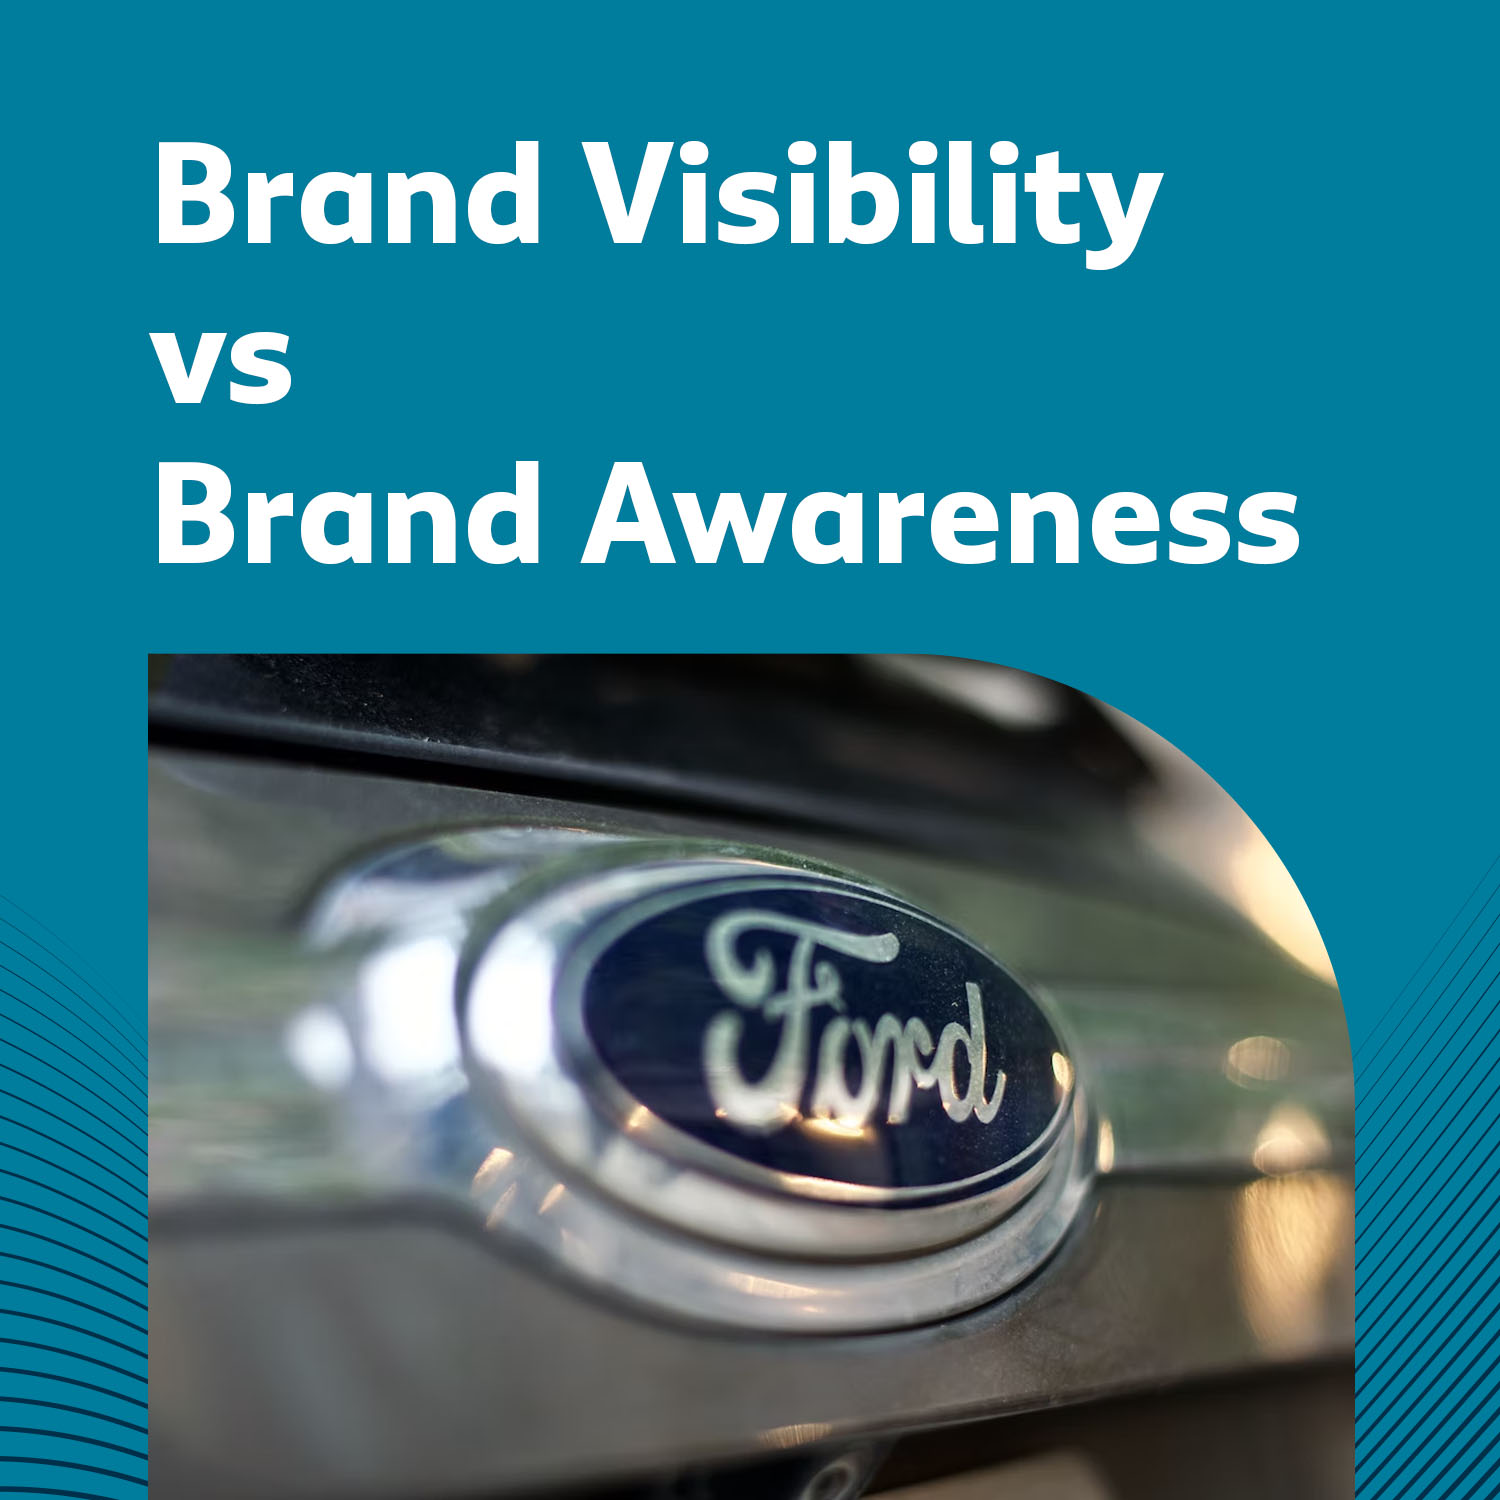 Brand Visibility